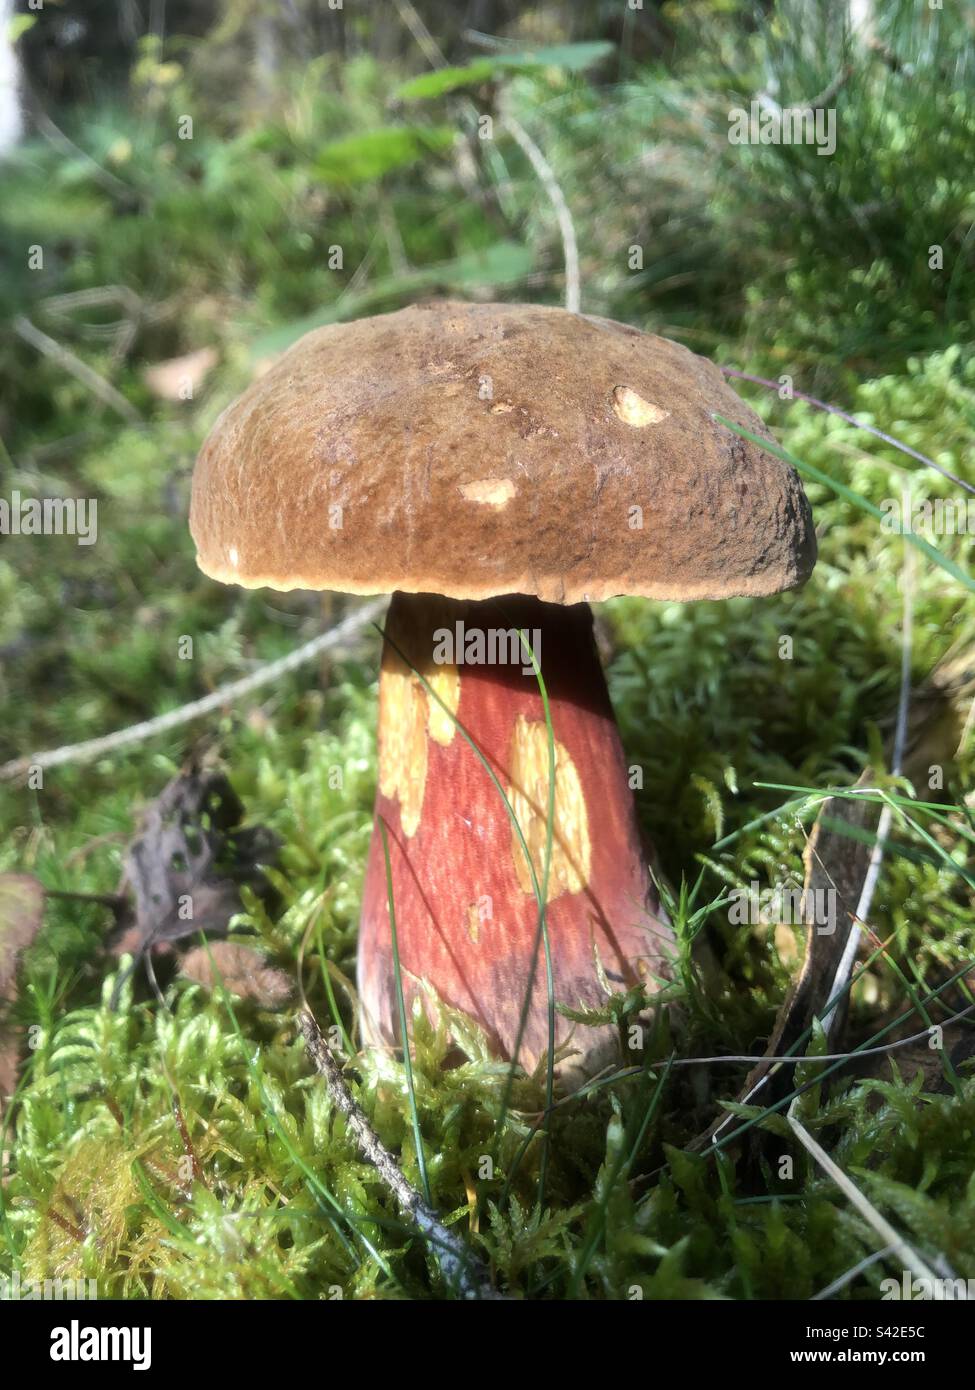 Mushroom (boletus erythropus) in free nature Stock Photo